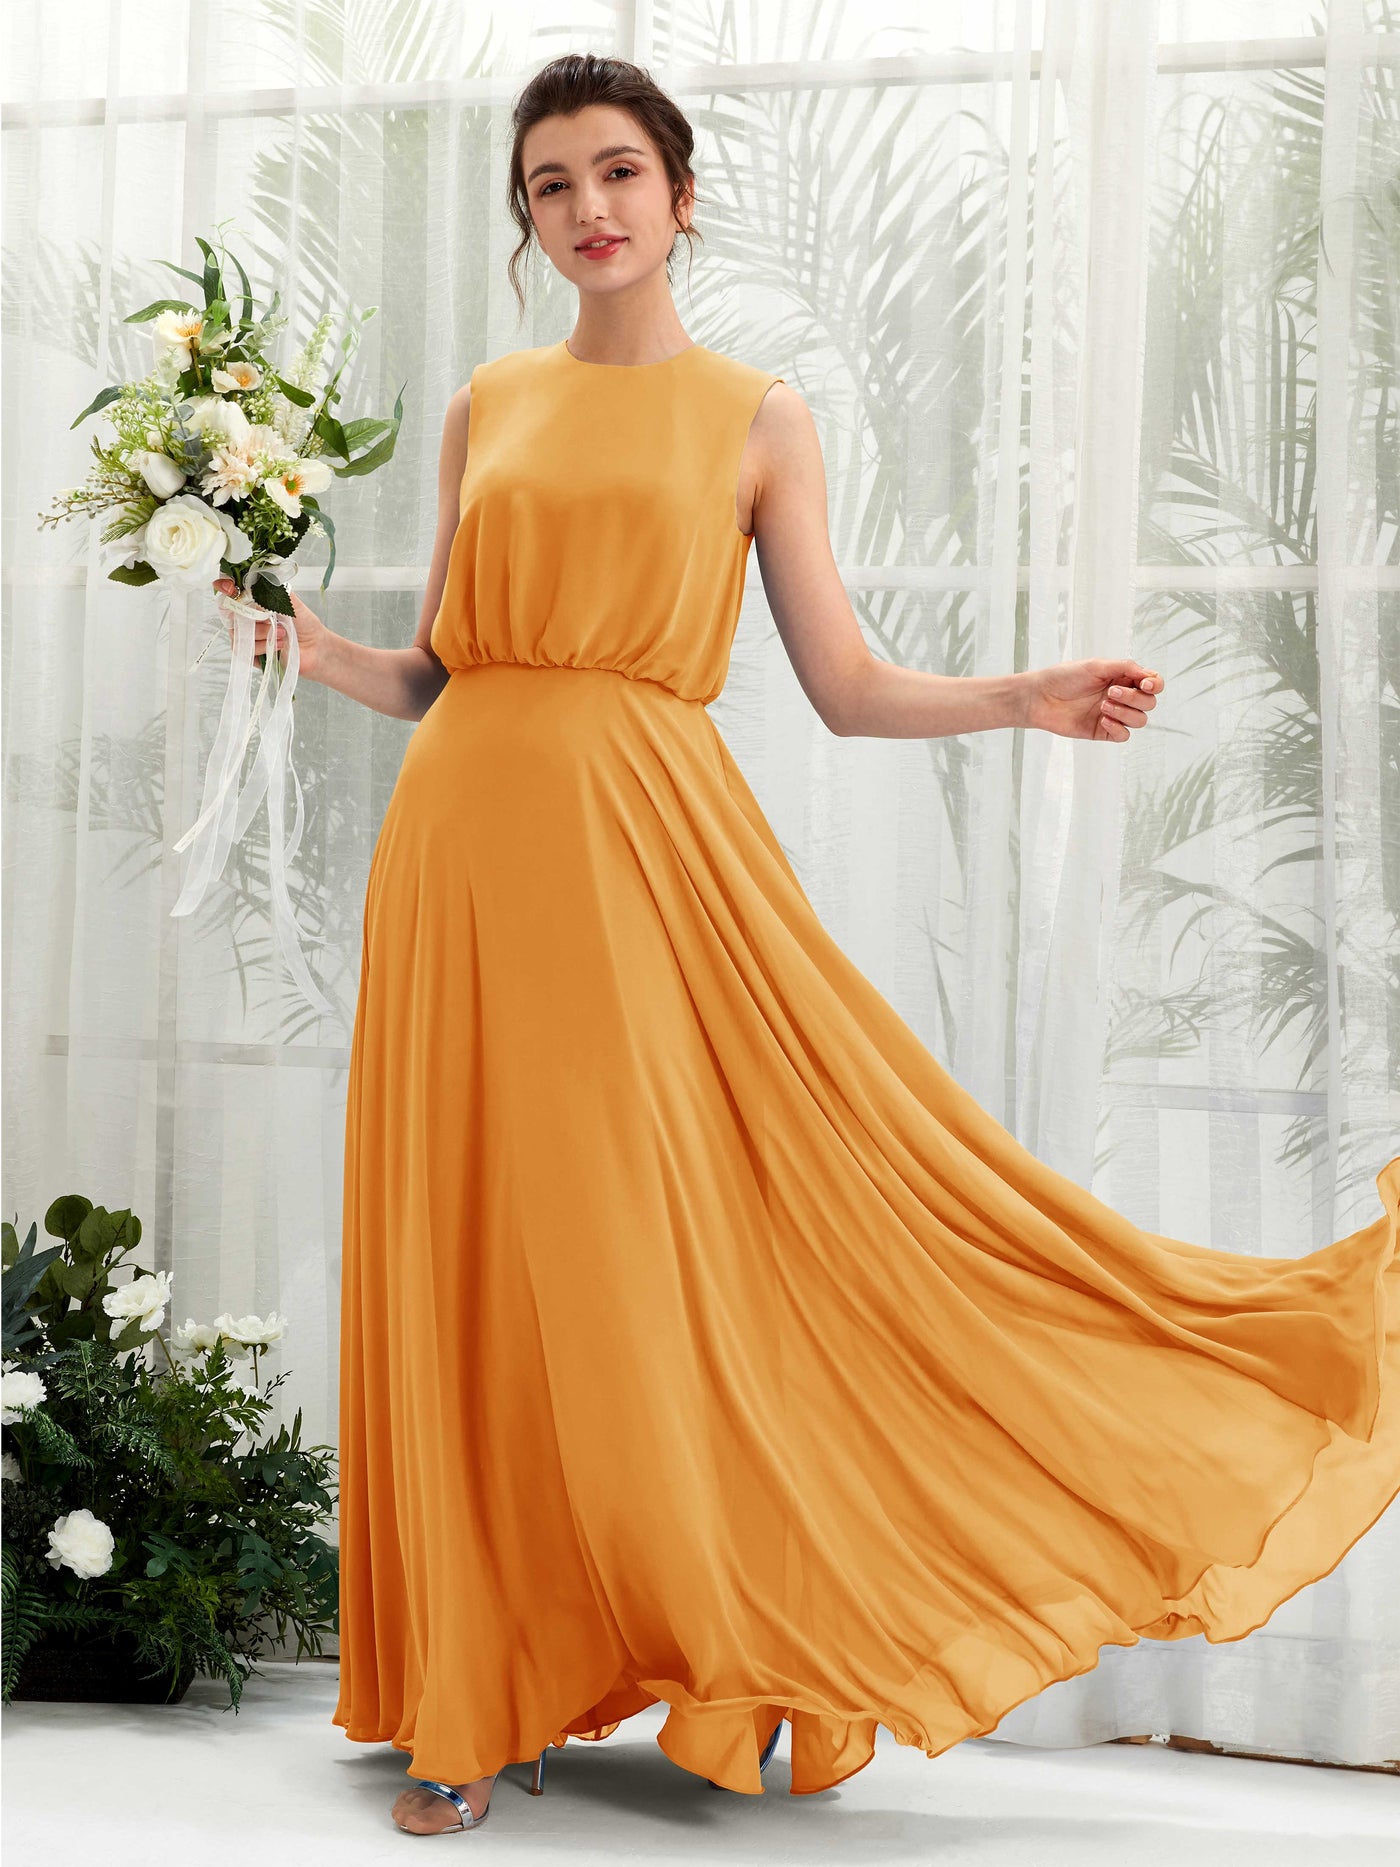 Mango Bridesmaid Dresses Bridesmaid Dress A-line Chiffon Round Full Length Sleeveless Wedding Party Dress (81222802)#color_mango